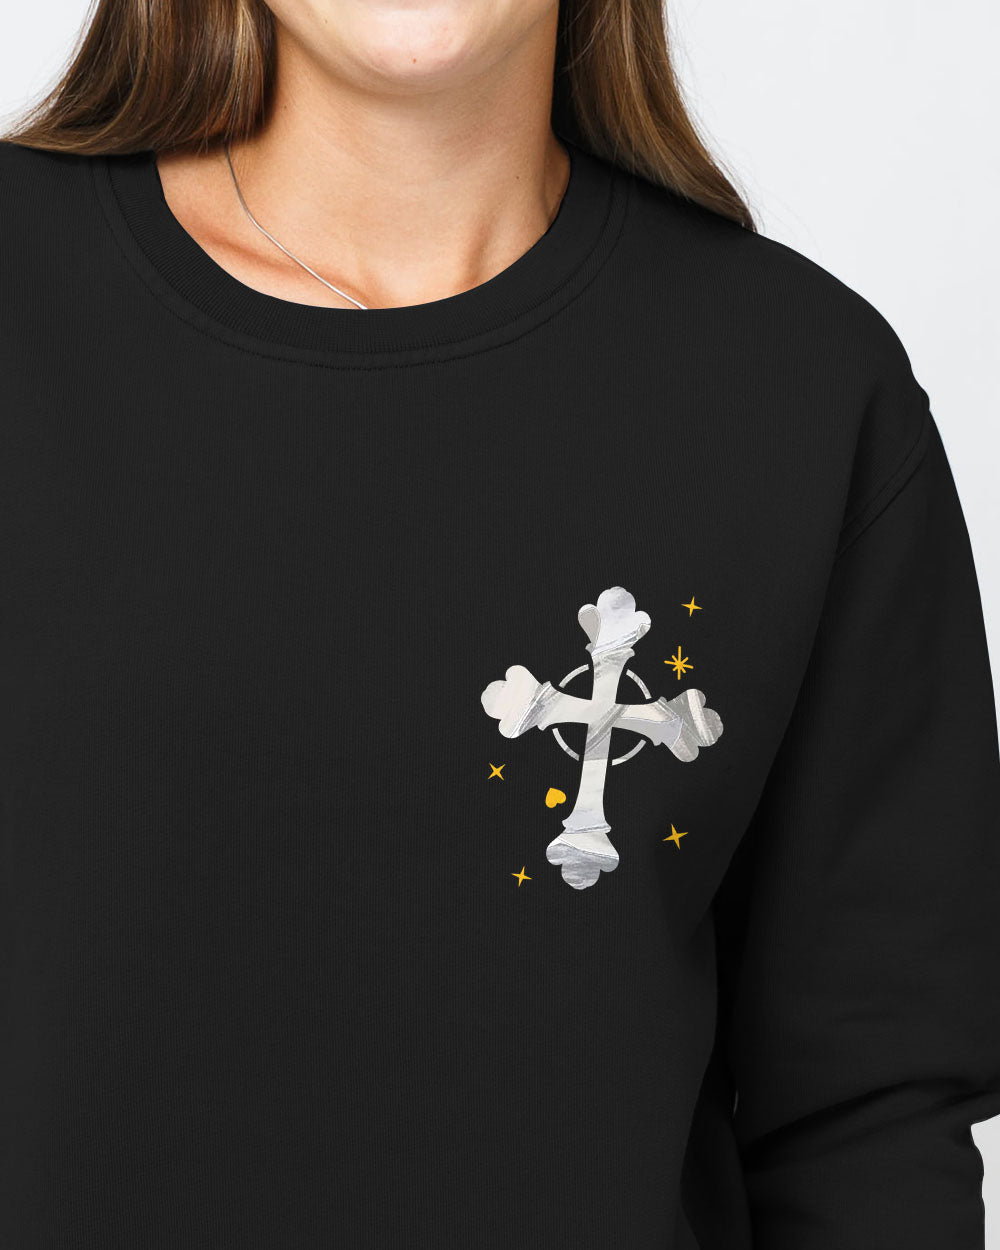 Choose Kind Daisy Women's Christian Sweatshirt